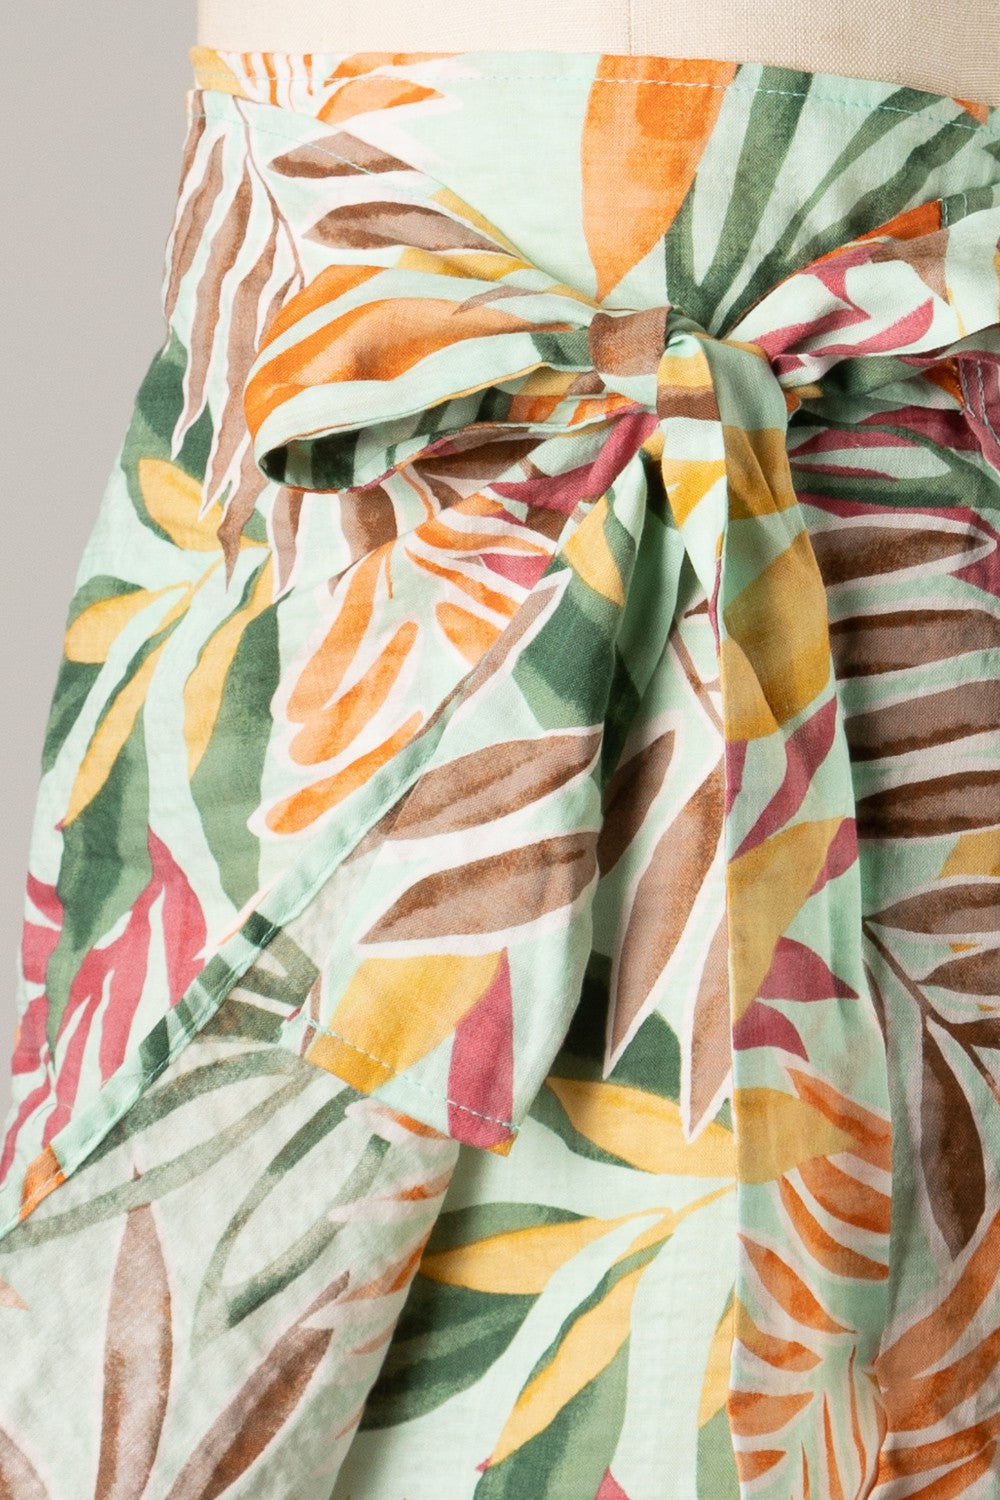 Tania Tropical Print Wrap Skirt in